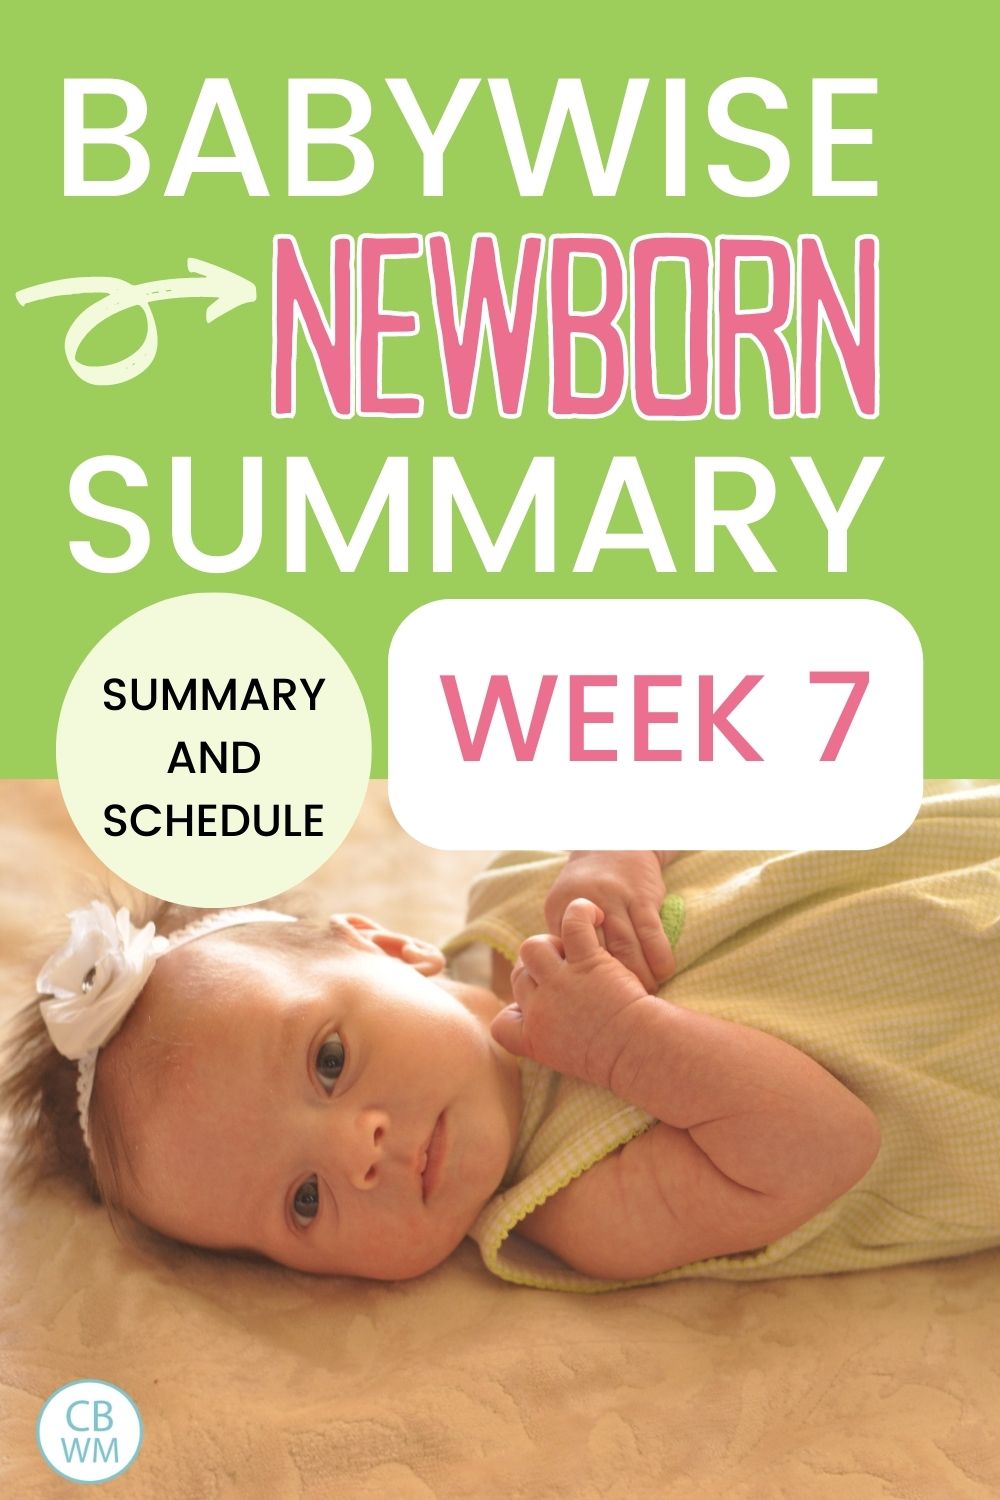 Week 7 Babywise summary pinnable image